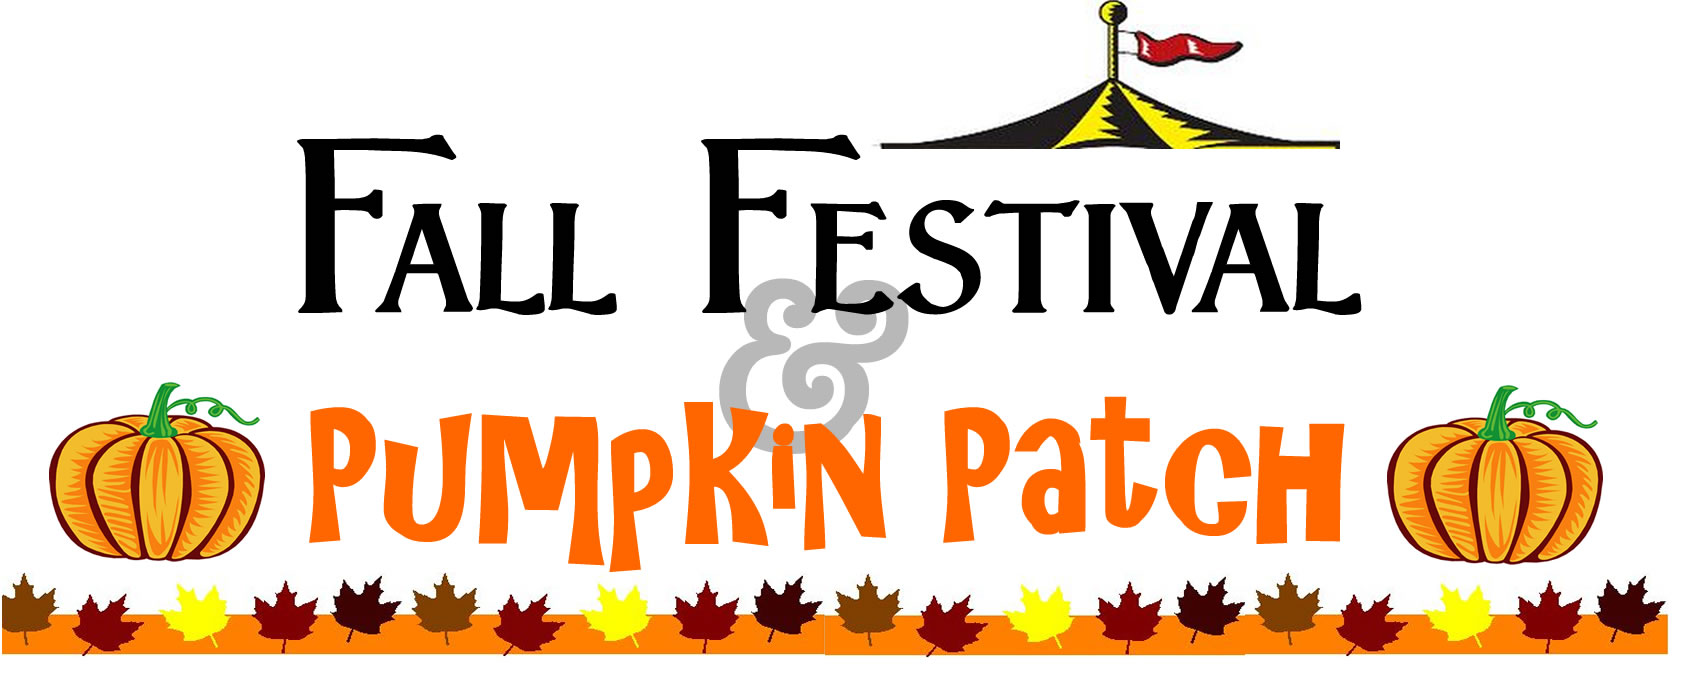 fall festival clipart - Fall Festival Clipart